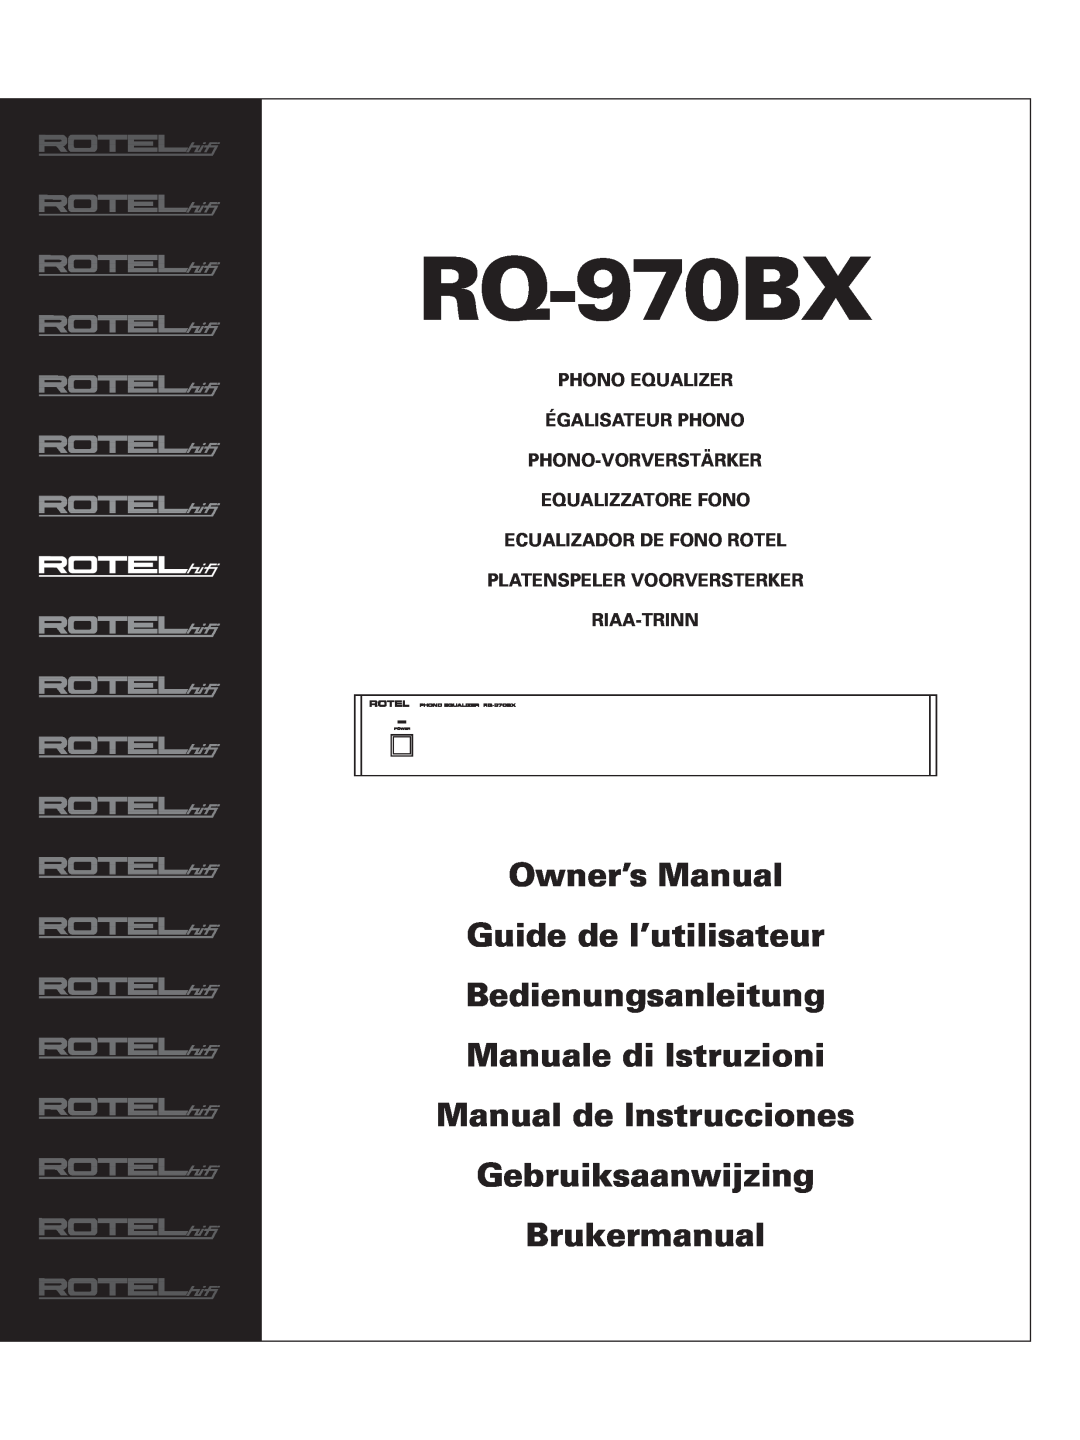 Rotel RQ-970BX owner manual Phono Equalizer Égalisateur Phono, Phono-Vorverstärker Equalizzatore Fono, Brukermanual 